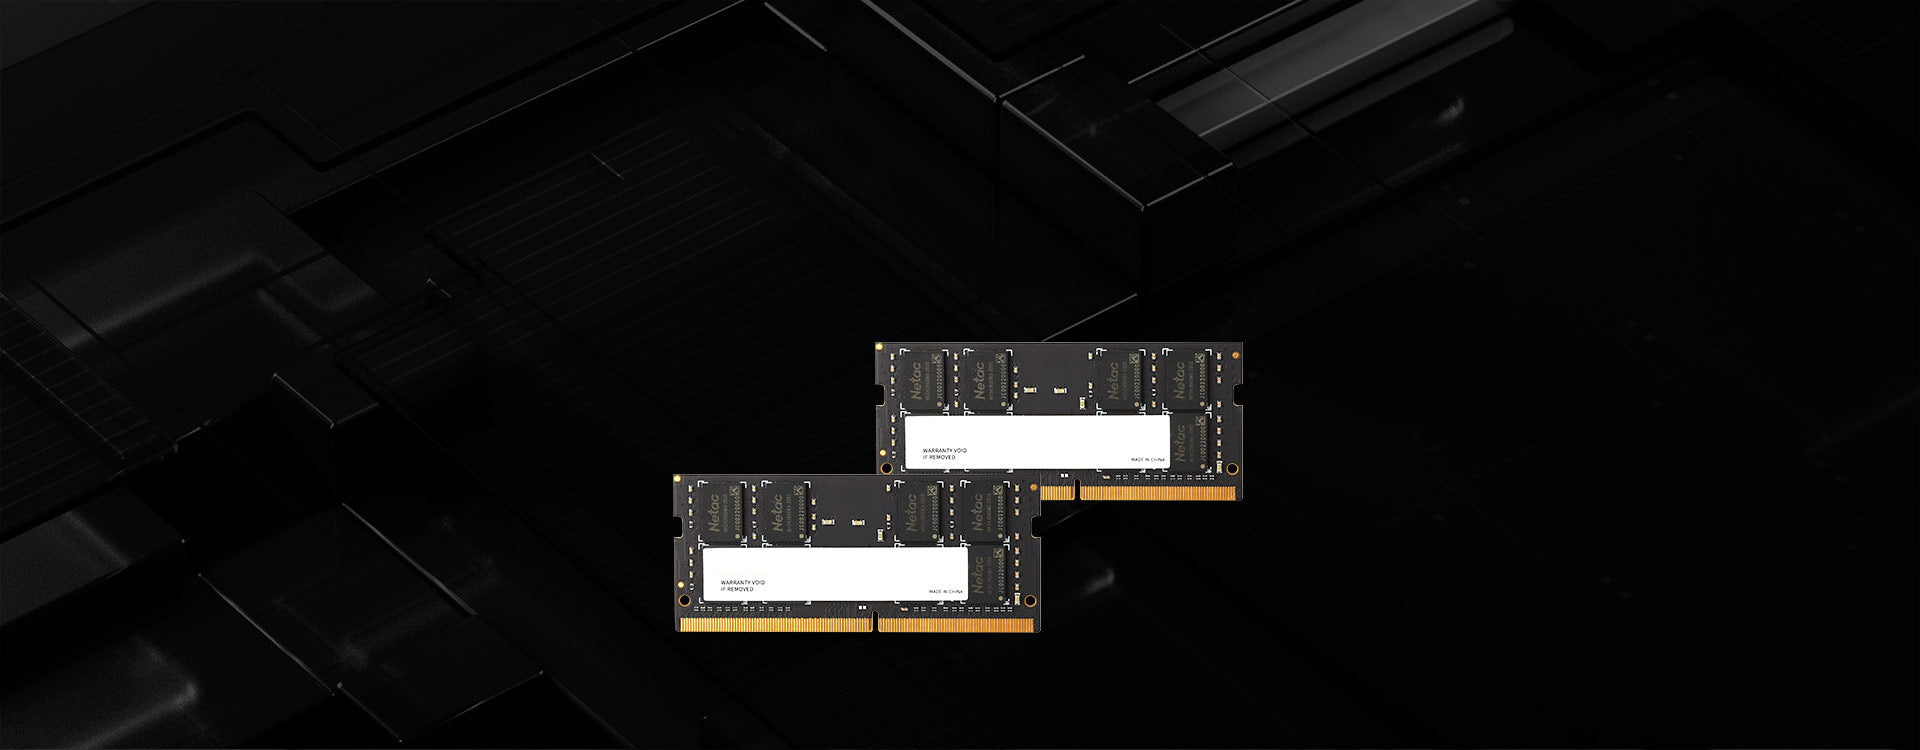 NETAC 8GB DDR4 3200 LAPTOP RAM